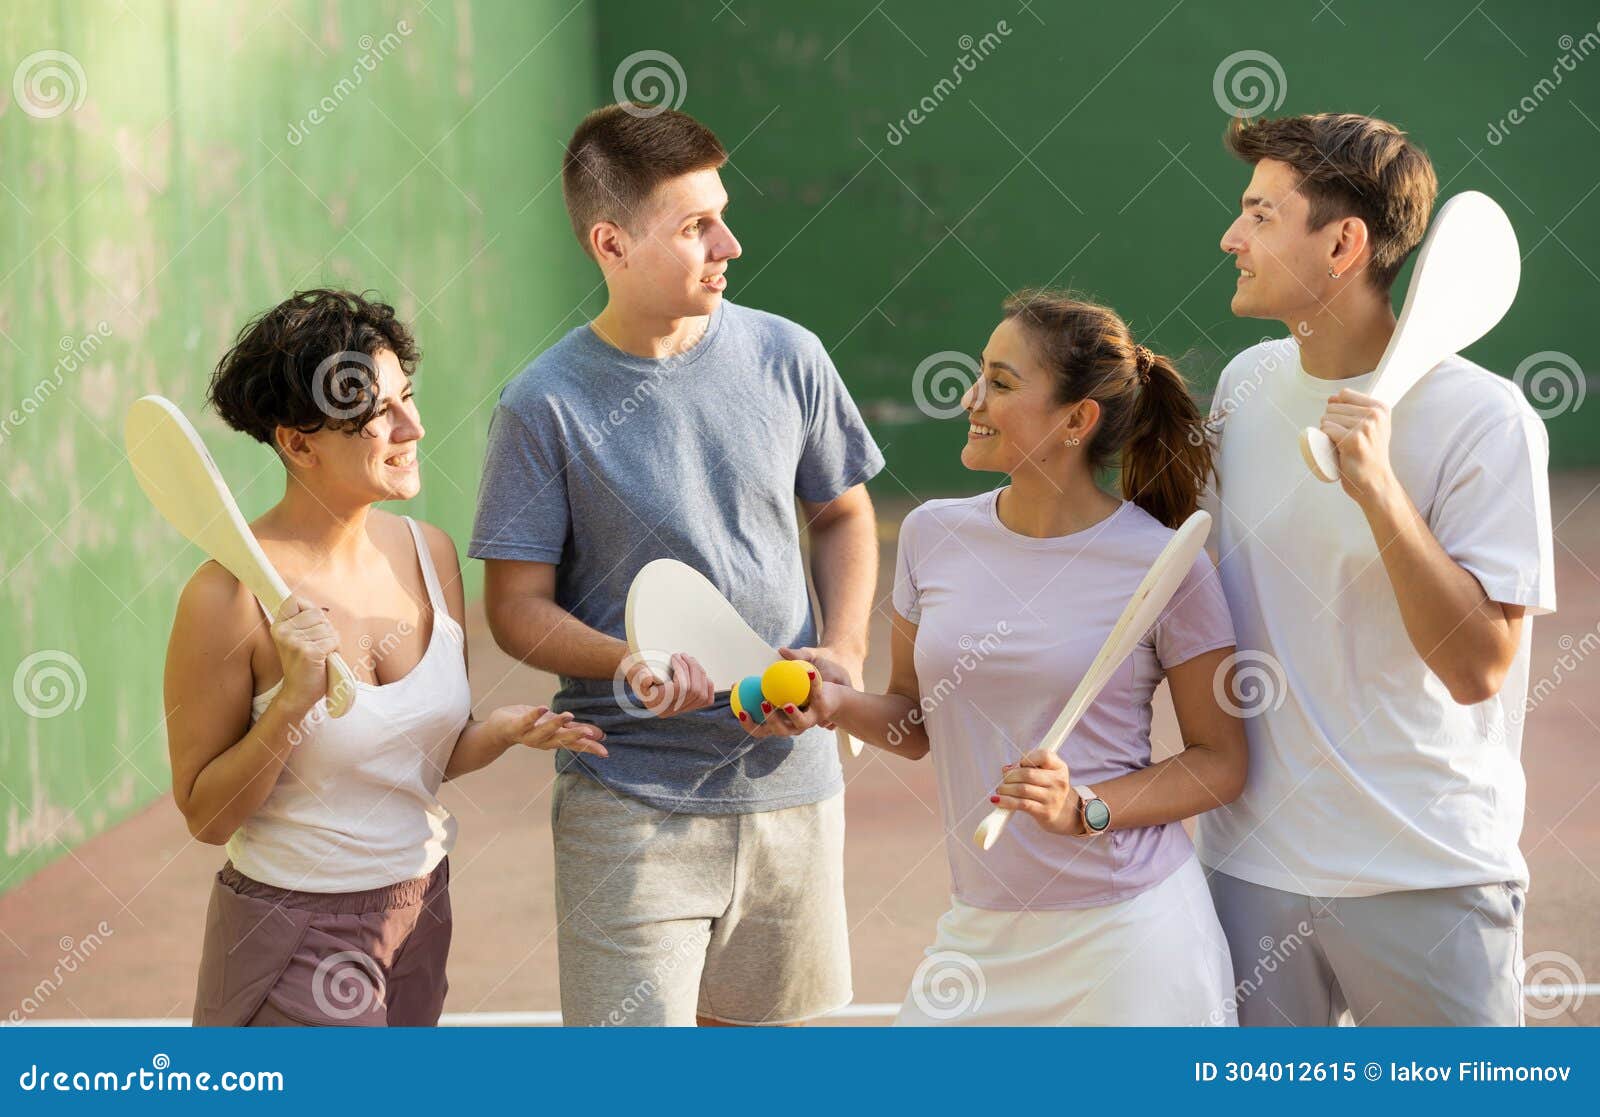 basque pelota players chatting on outdoor fronton